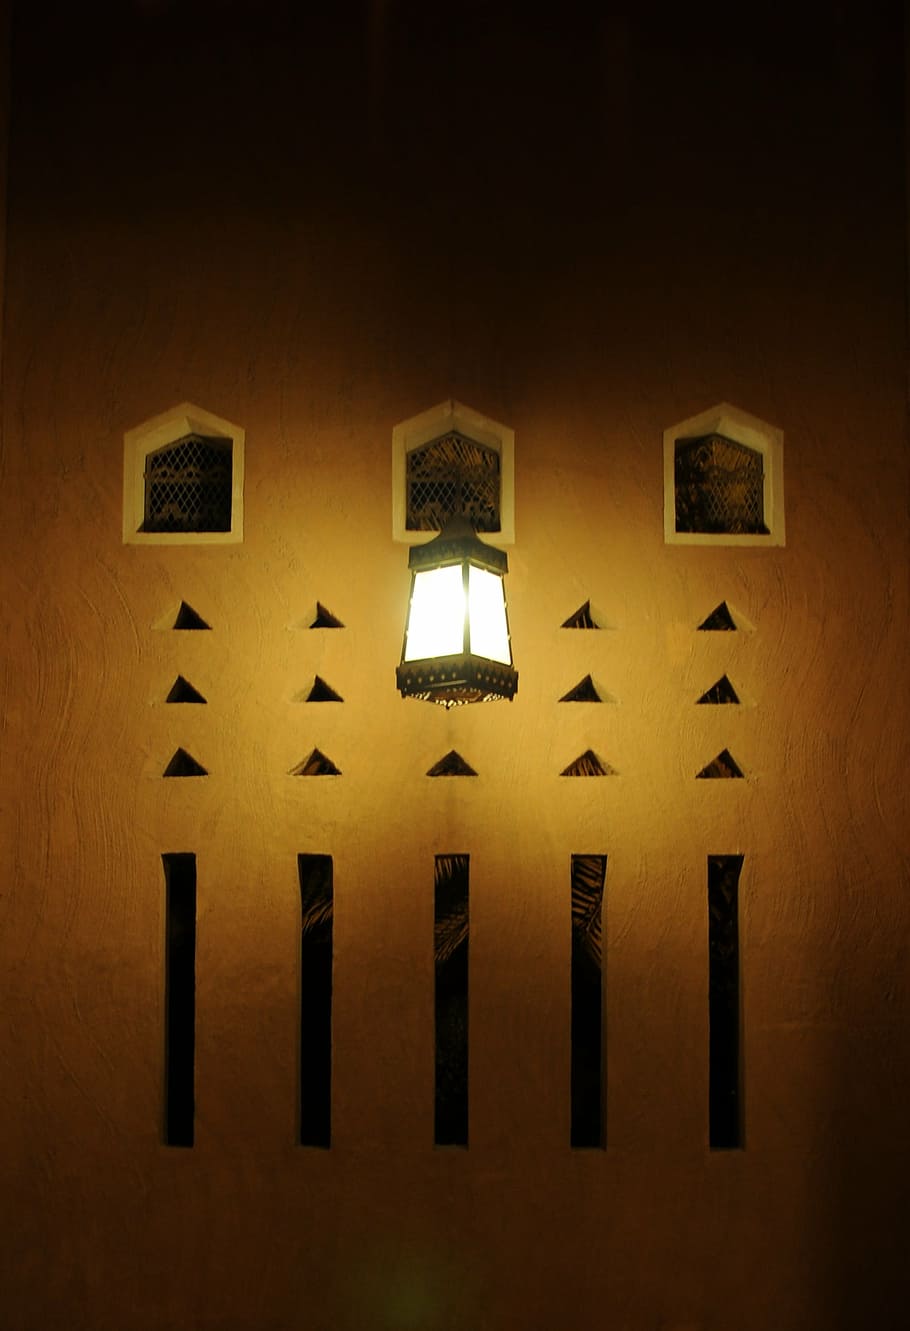 barro, viejo, arabia saudita, tradicional, casa de barro, claro, oscuro, iluminado, equipo de iluminación, en interiores